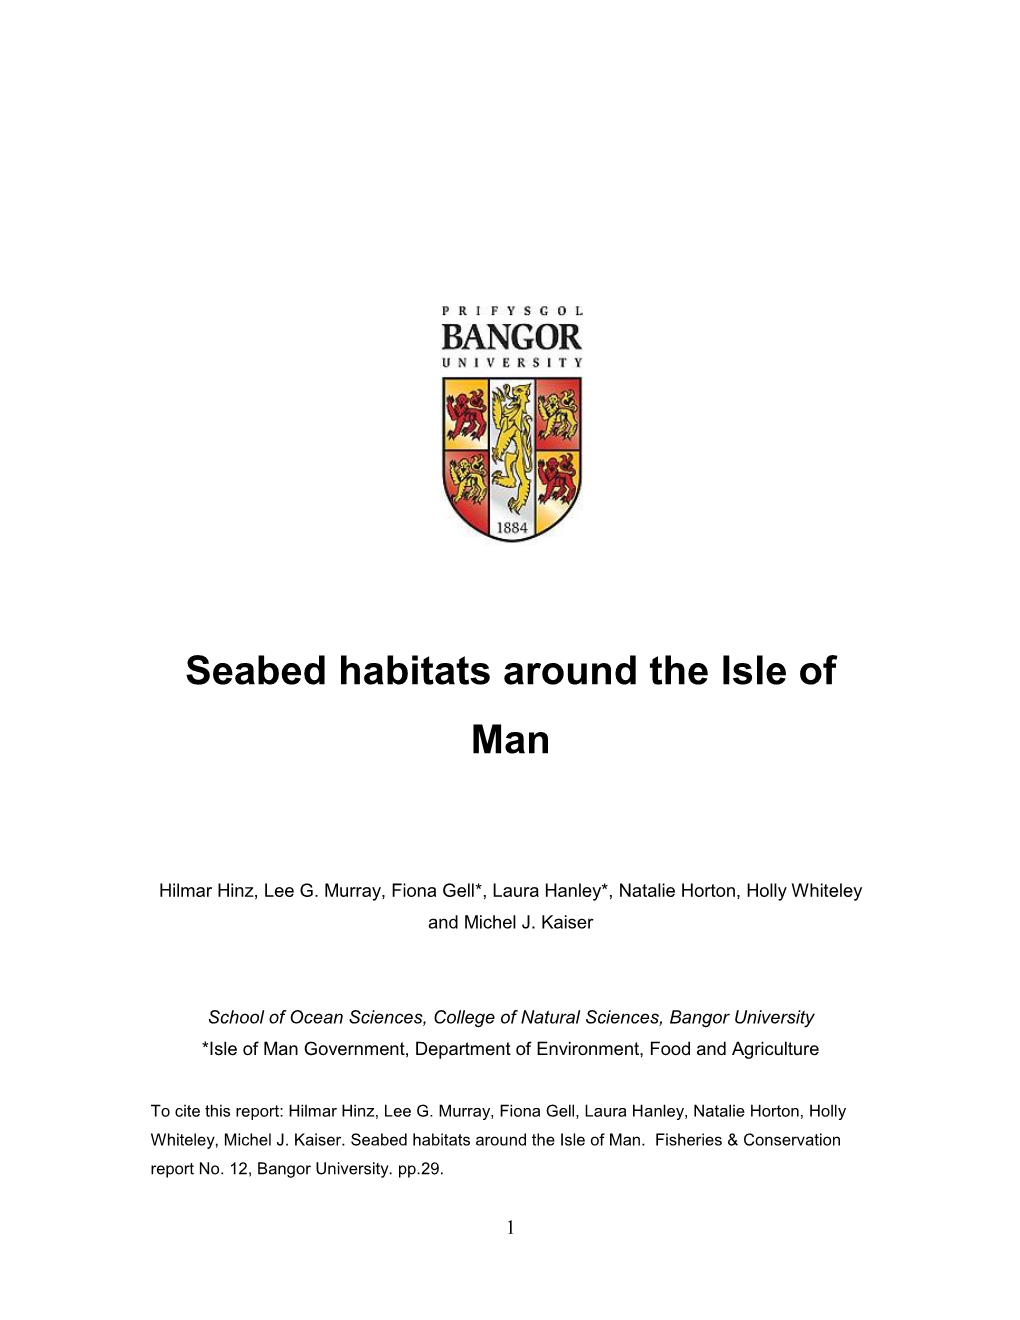 Seabed Habitats Around the Isle of Man